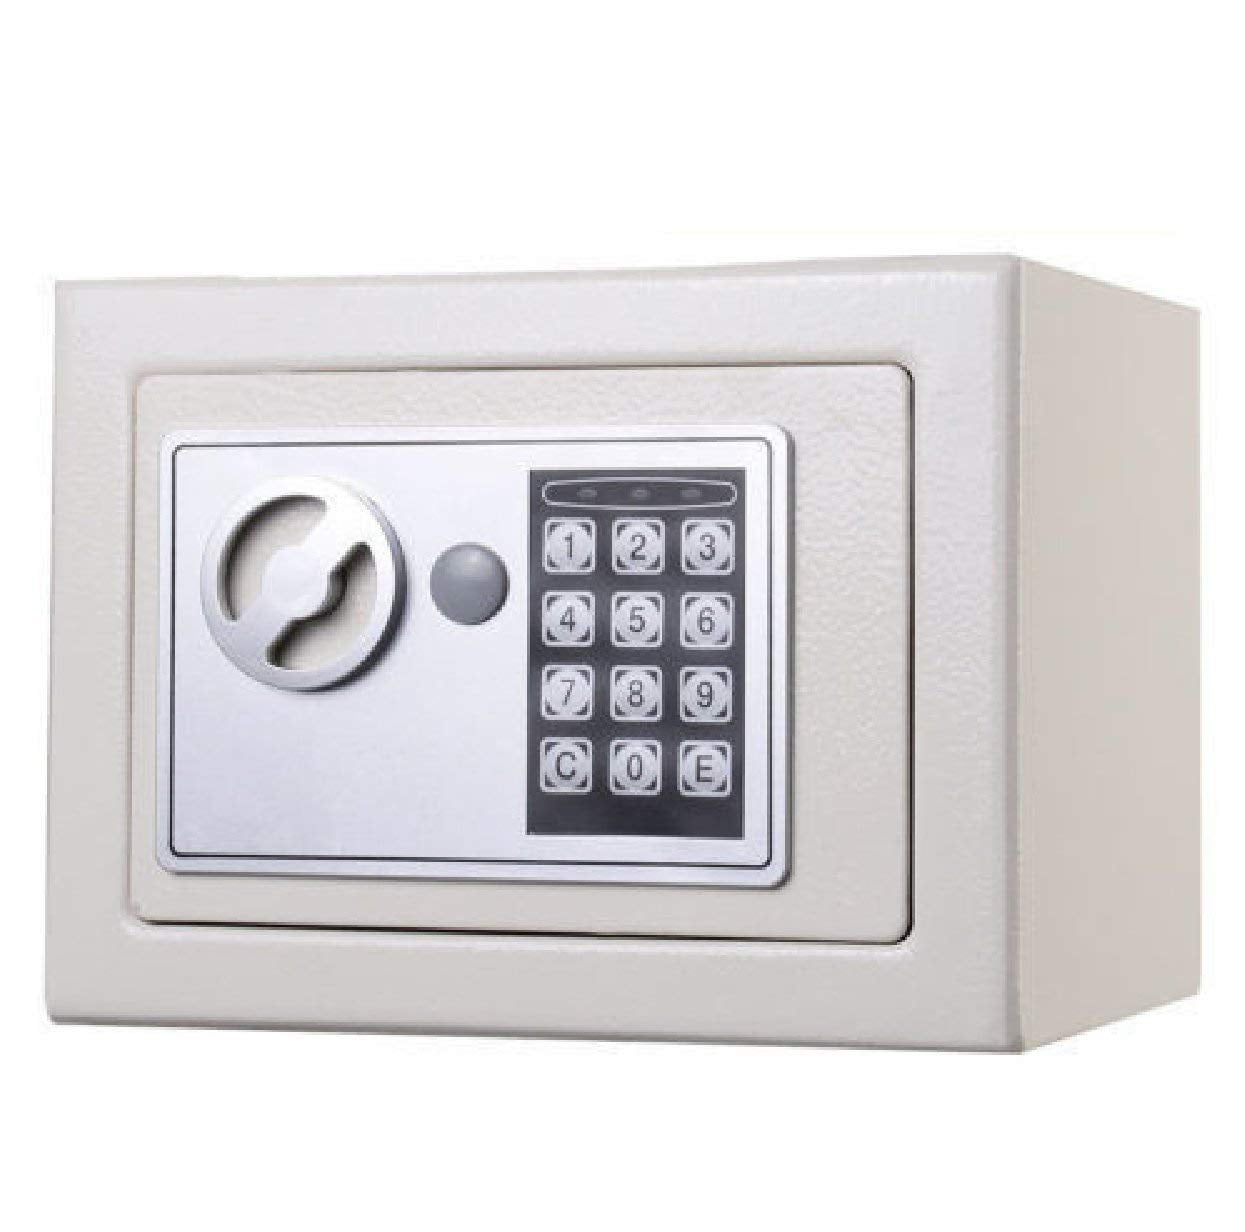 New Small White Digital Electronic Safe Box Keypad Lock Home Office Hotel Gun US 